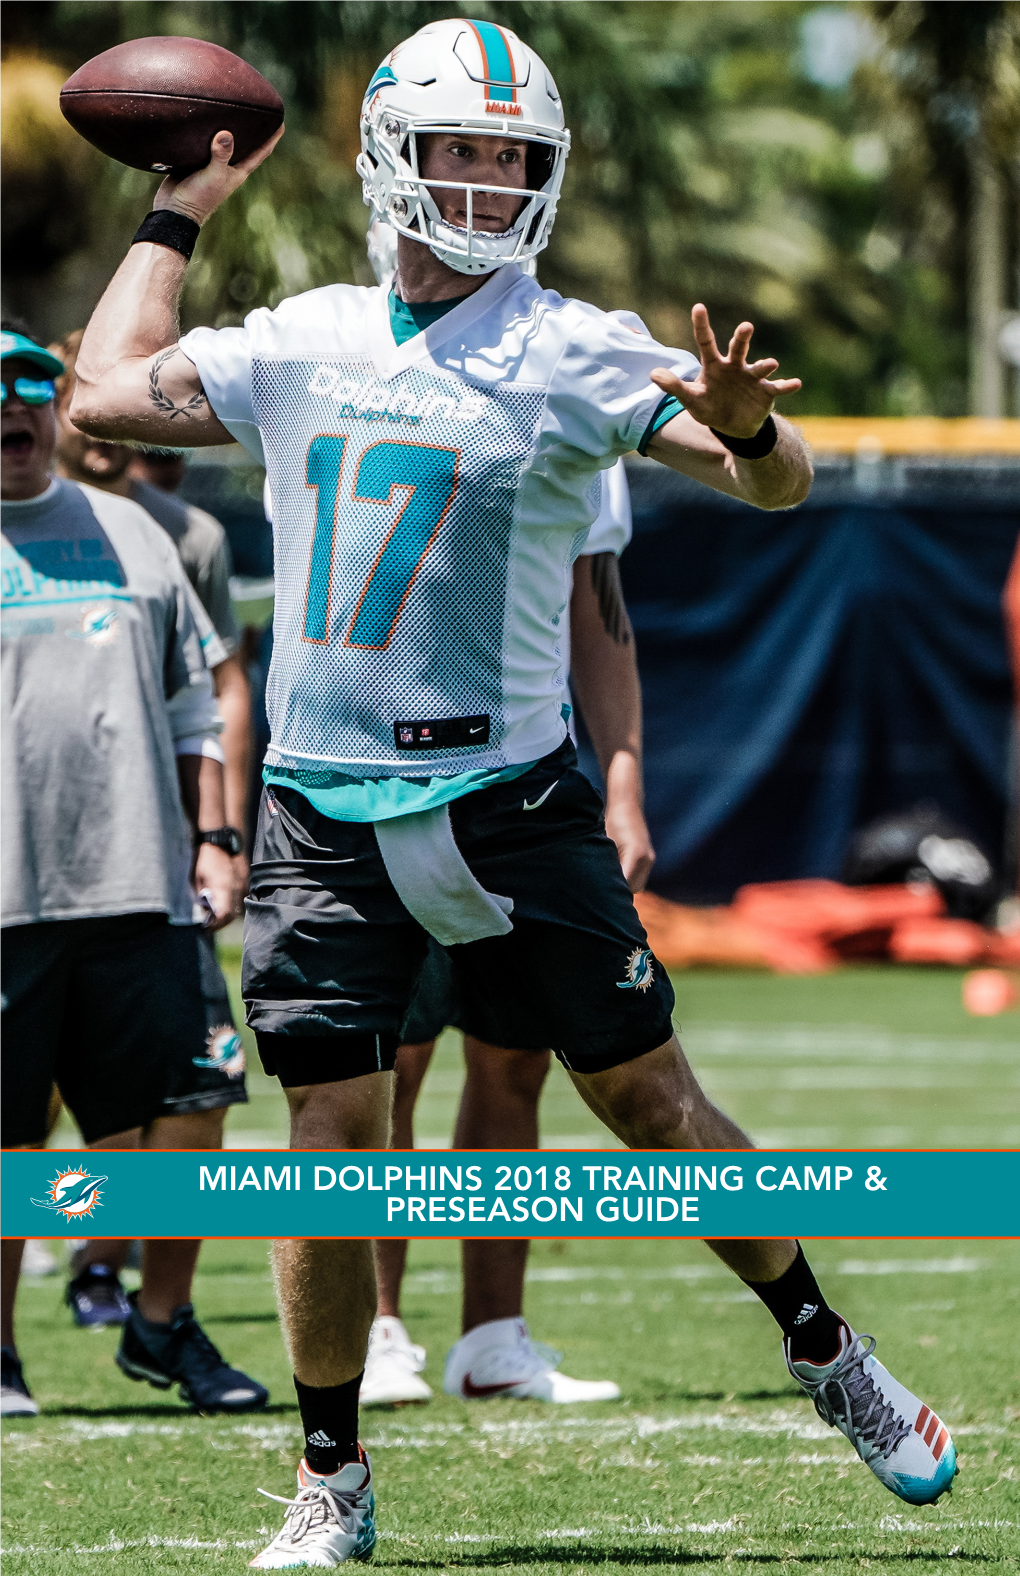 Miami Dolphins 2018 Training Camp & Preseason Guide